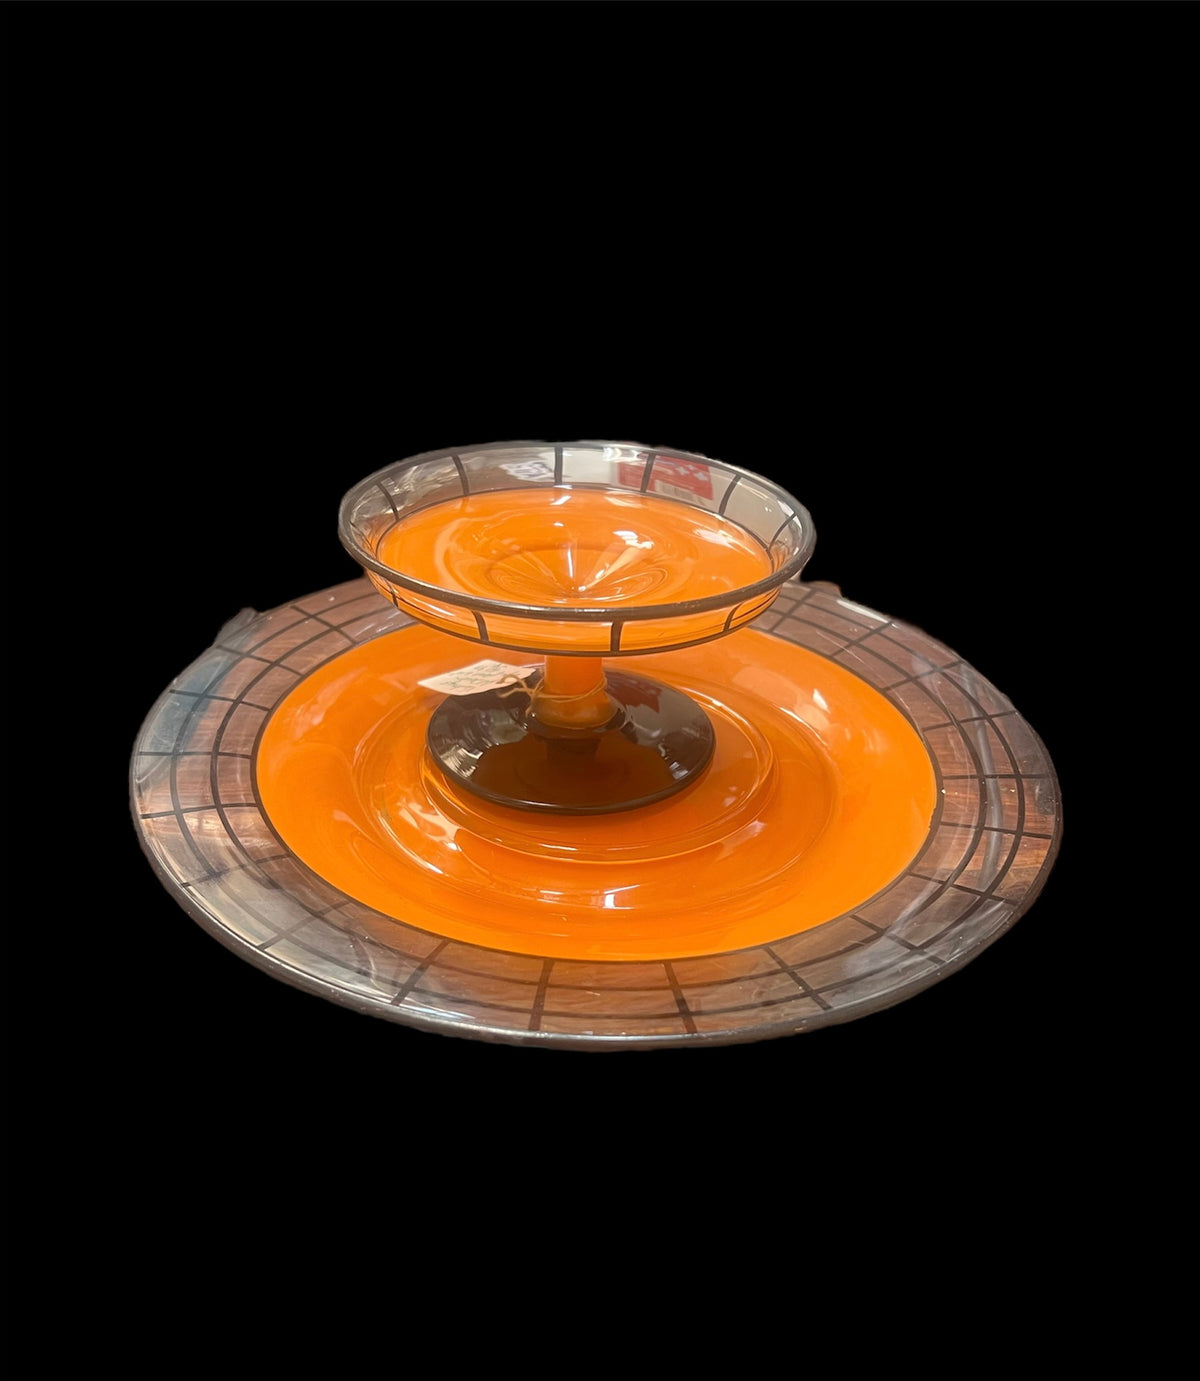 Bohemian Style Art Deco Style Platter with Cocktail Dish - Orange /Black